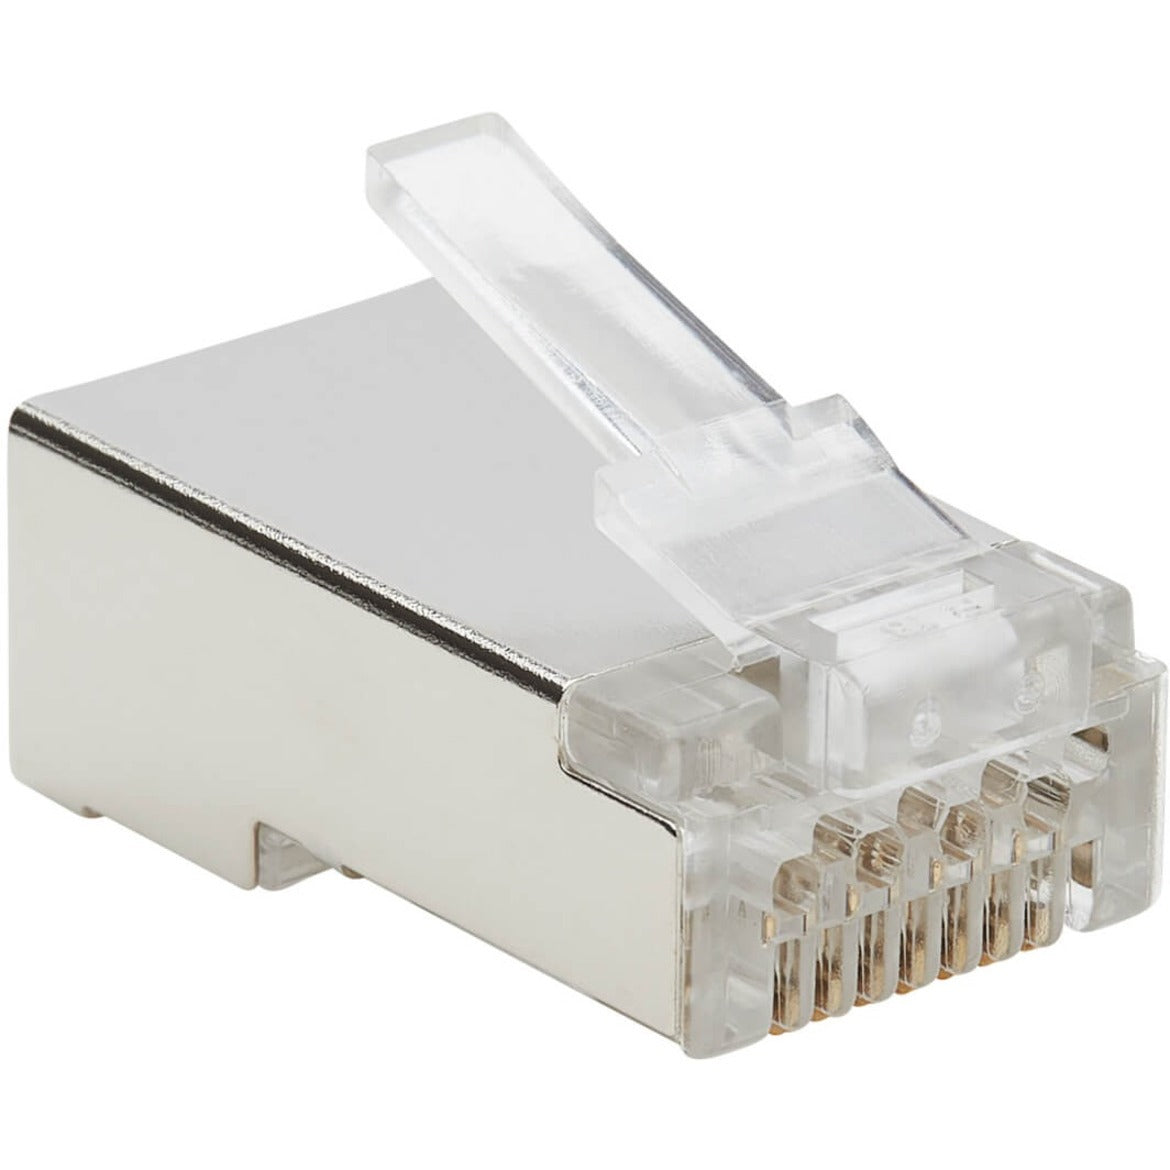 Tripp Lite N232-100-FTP Cat6 RJ45 Pass-Through FTP Modular Plug 100 Pack Crosstalk and EMI/RF Protection